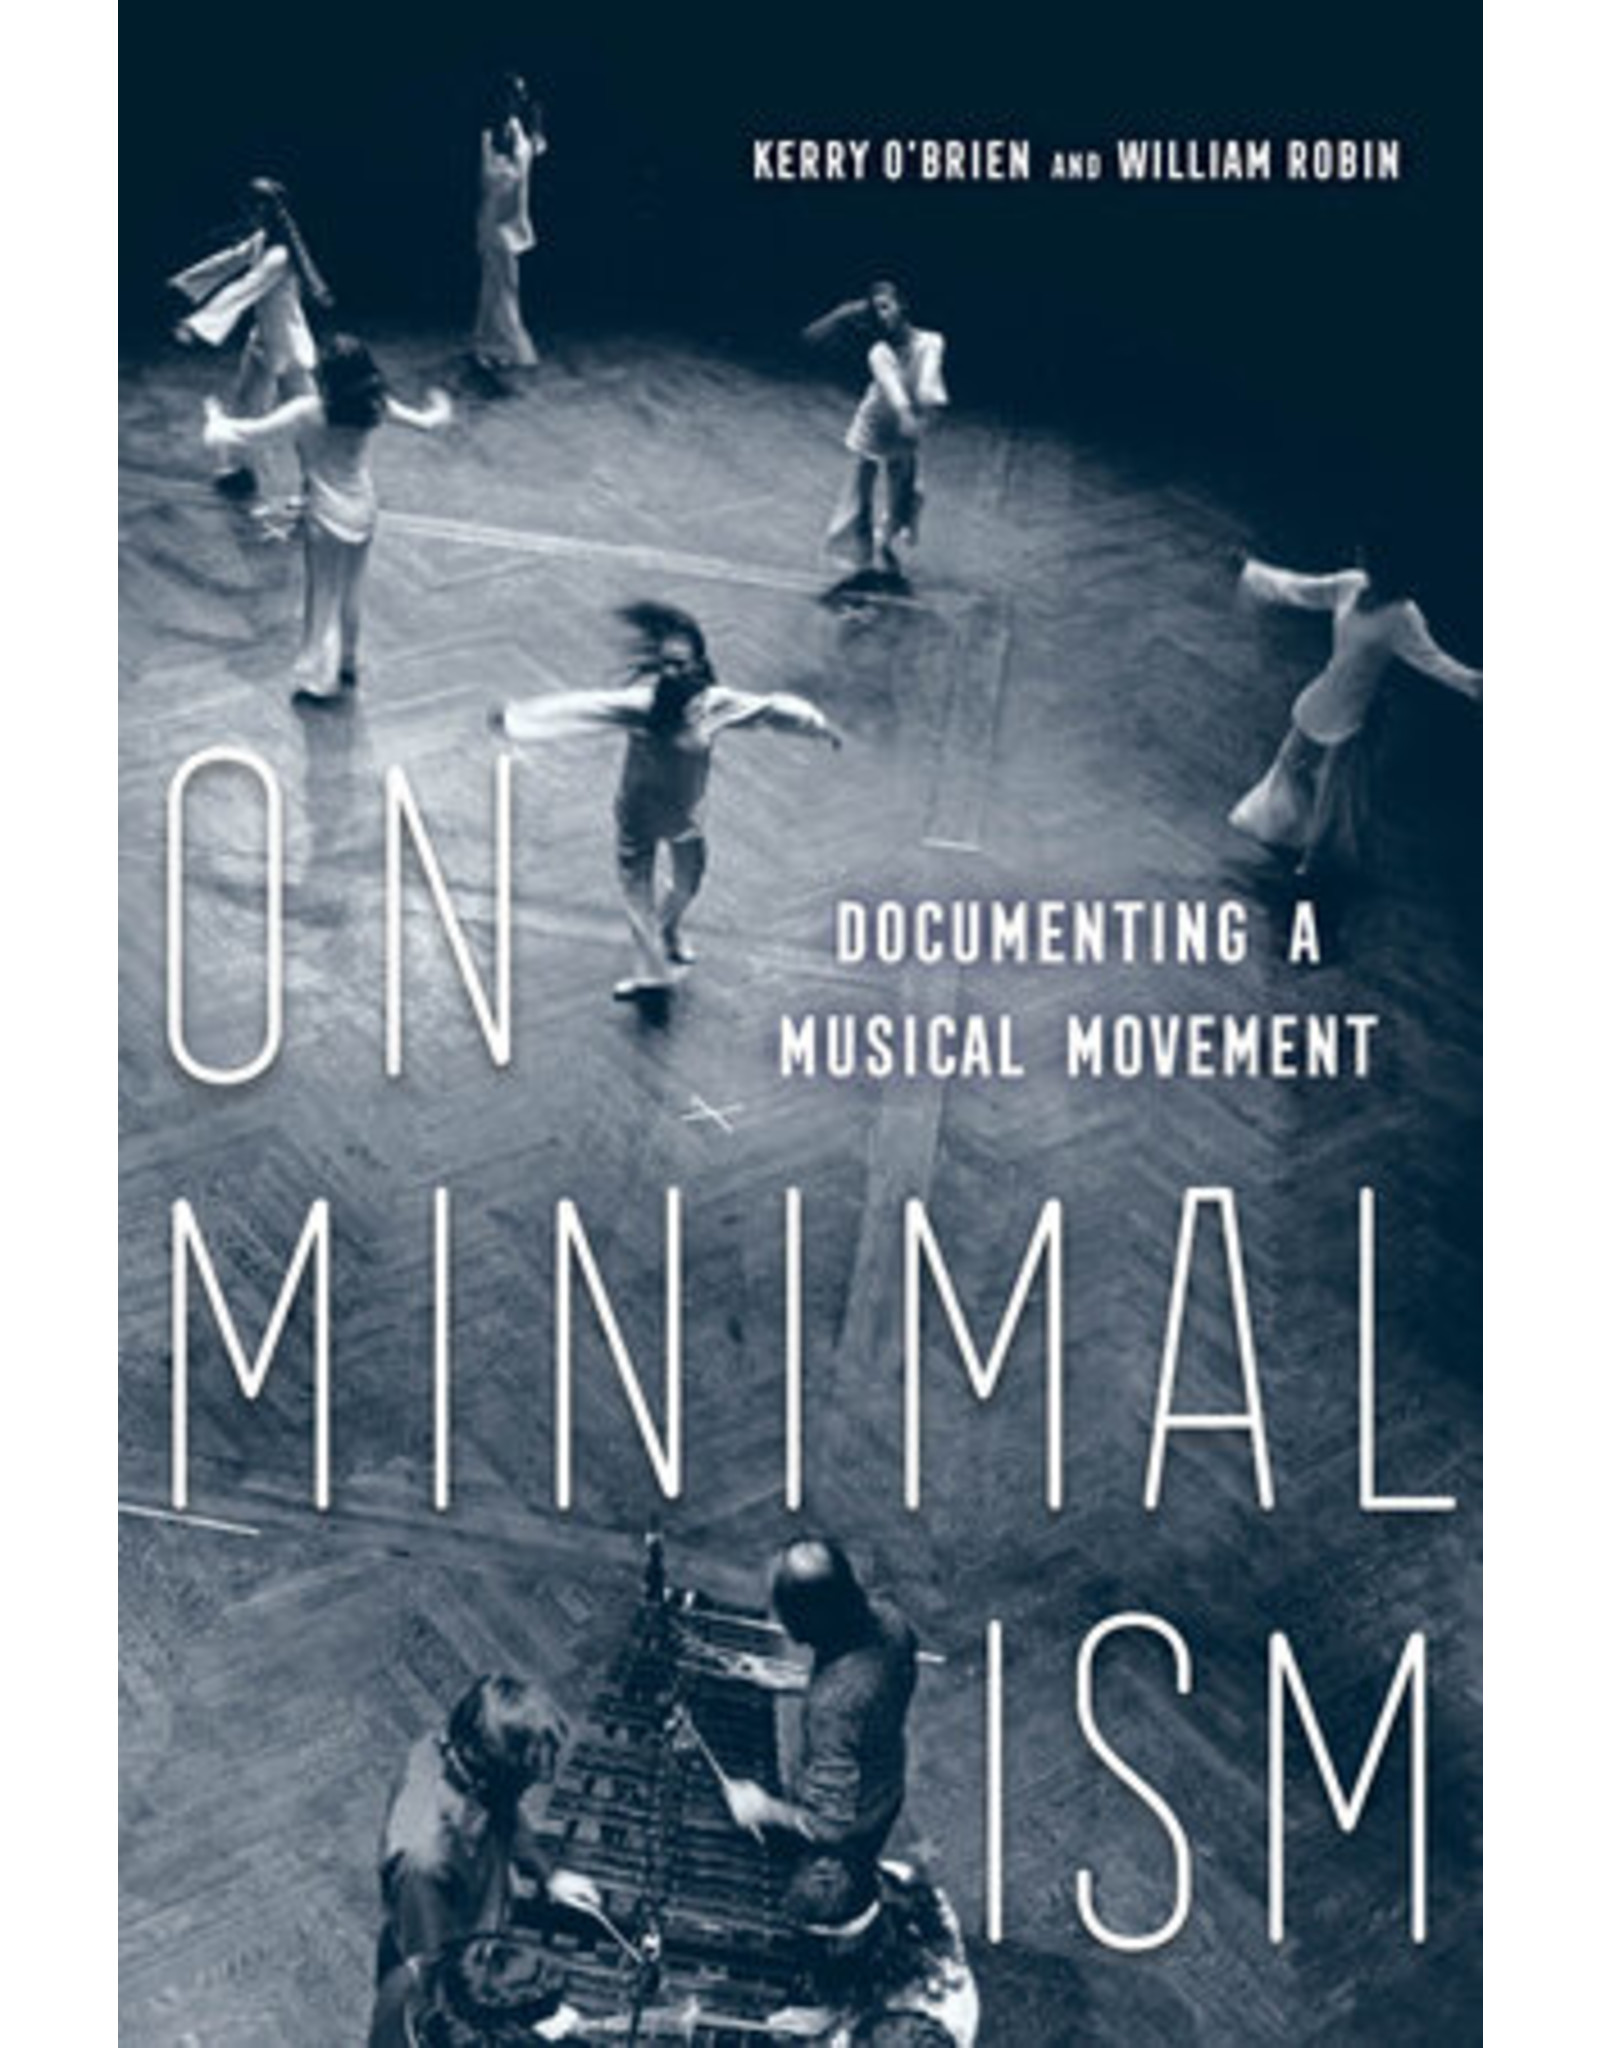 Kerry O'Brien & William Robin: On Minimalism